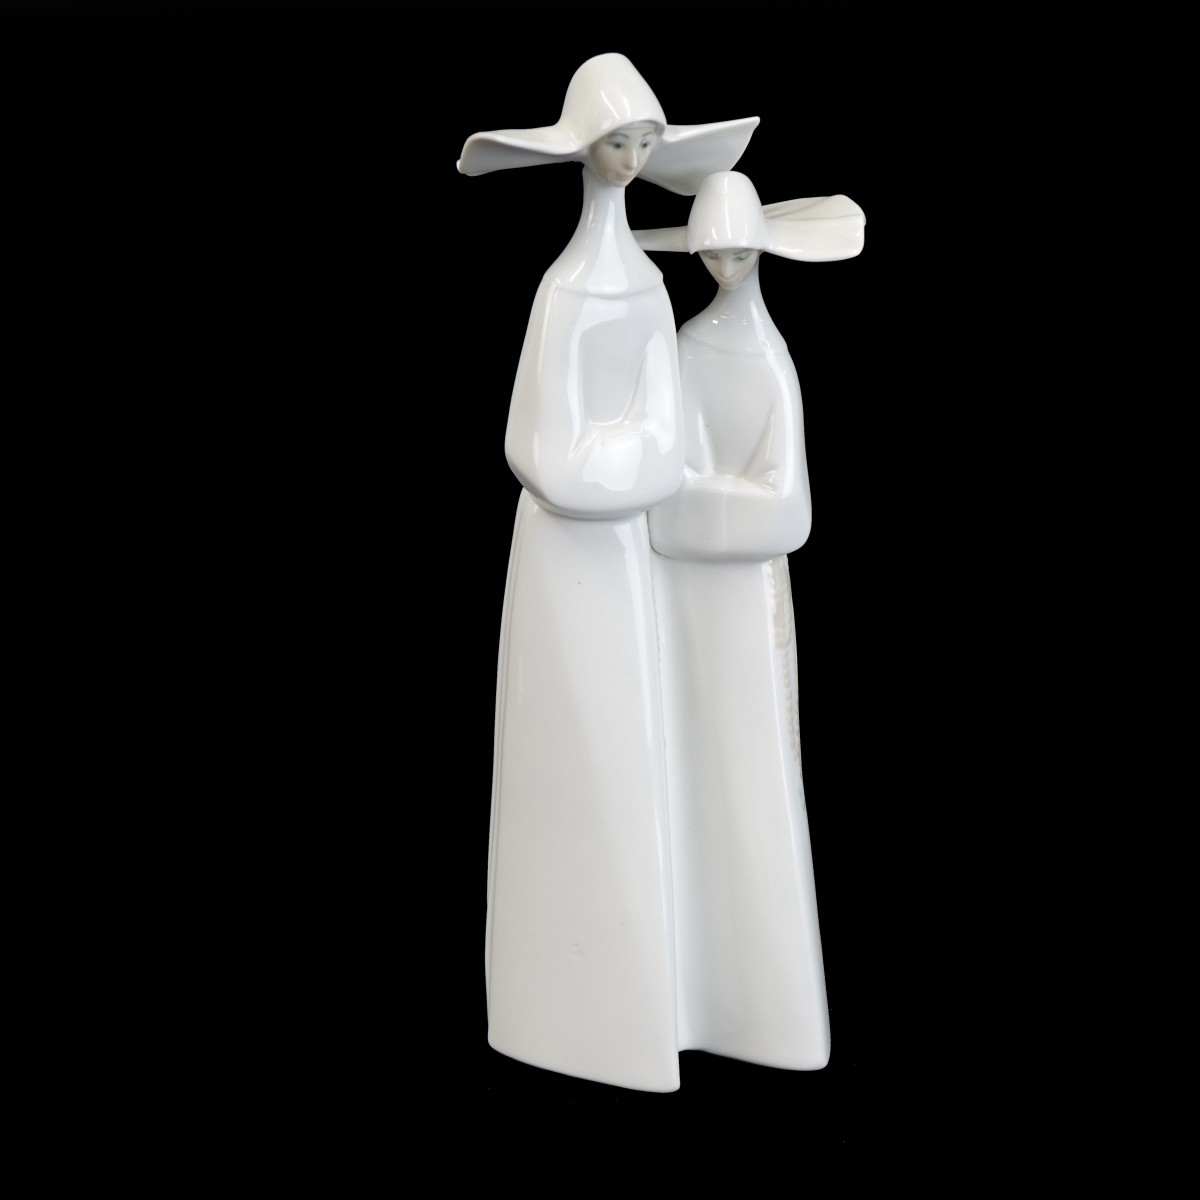 Lladro "Nuns" Glazed Porcelain Figurine